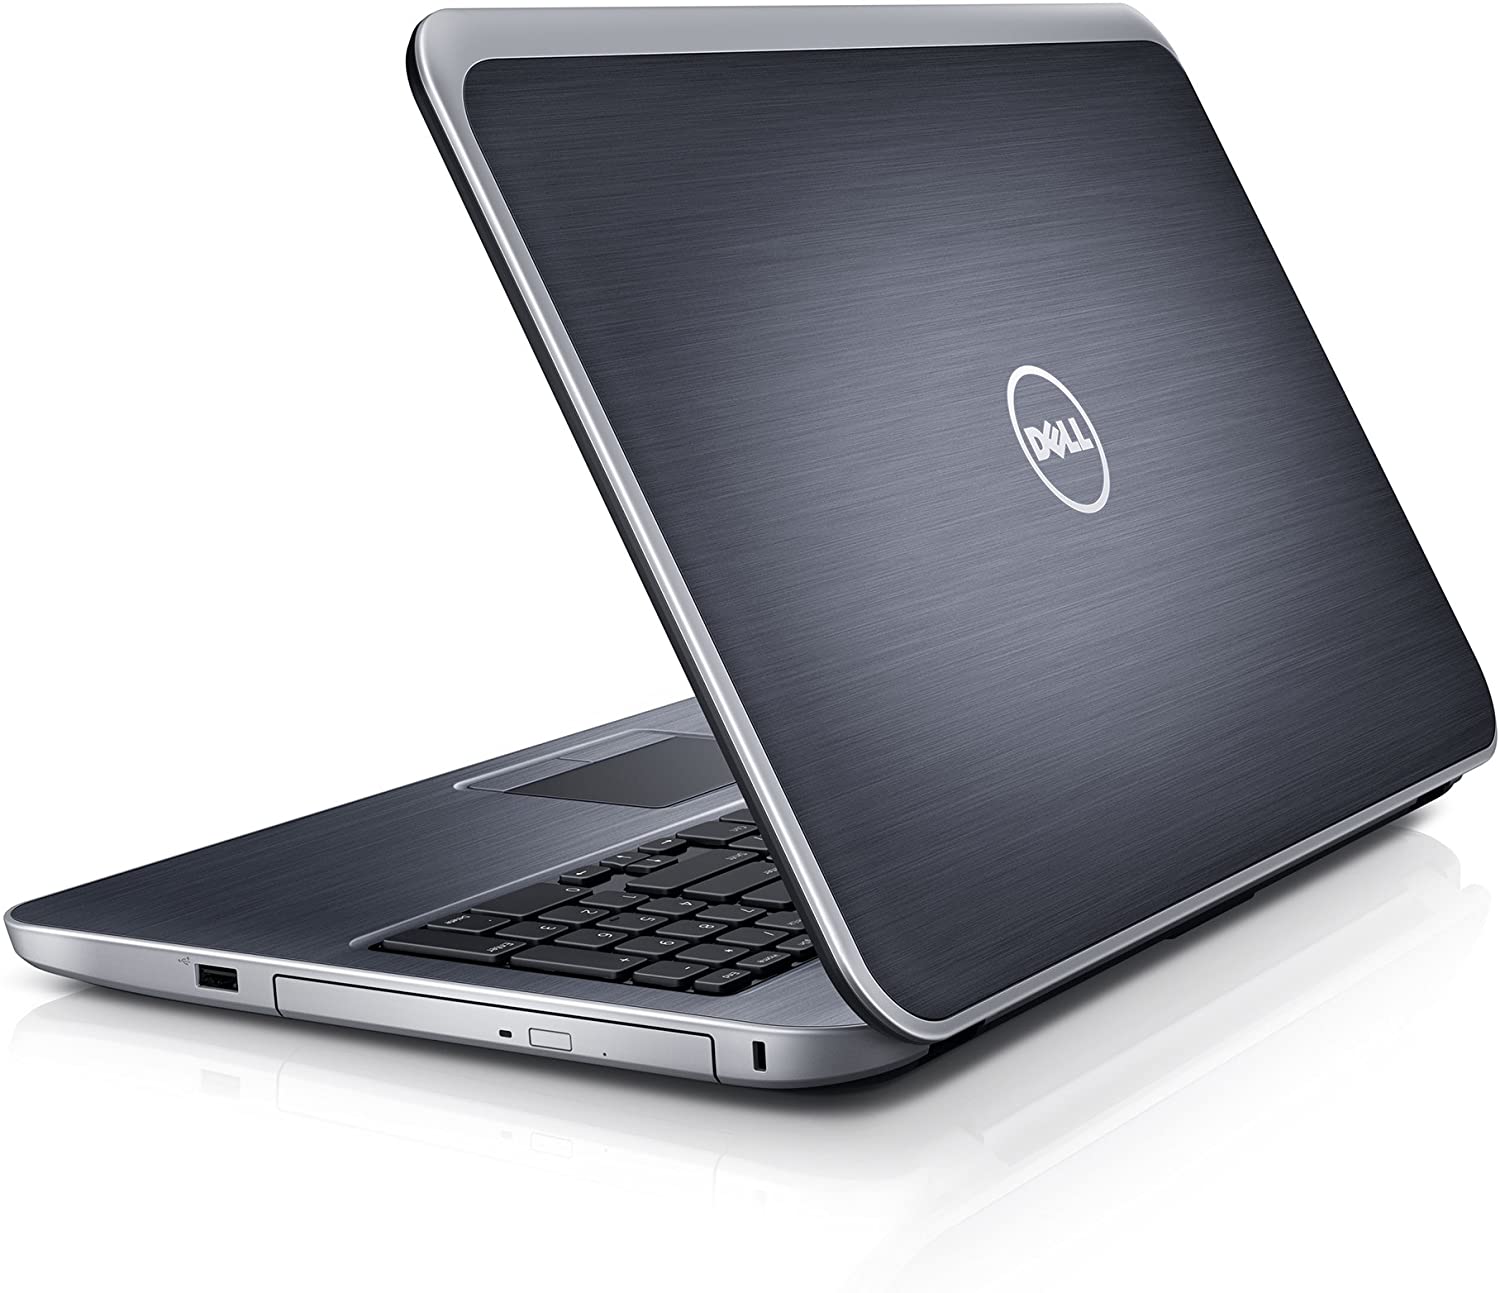 Laptop Dell Inspiron N5737  i5 4th Gen, Ram 6Gb, Disco HDD 1Tb, Display 17” , con Dvd writer, Webcam, Renovada